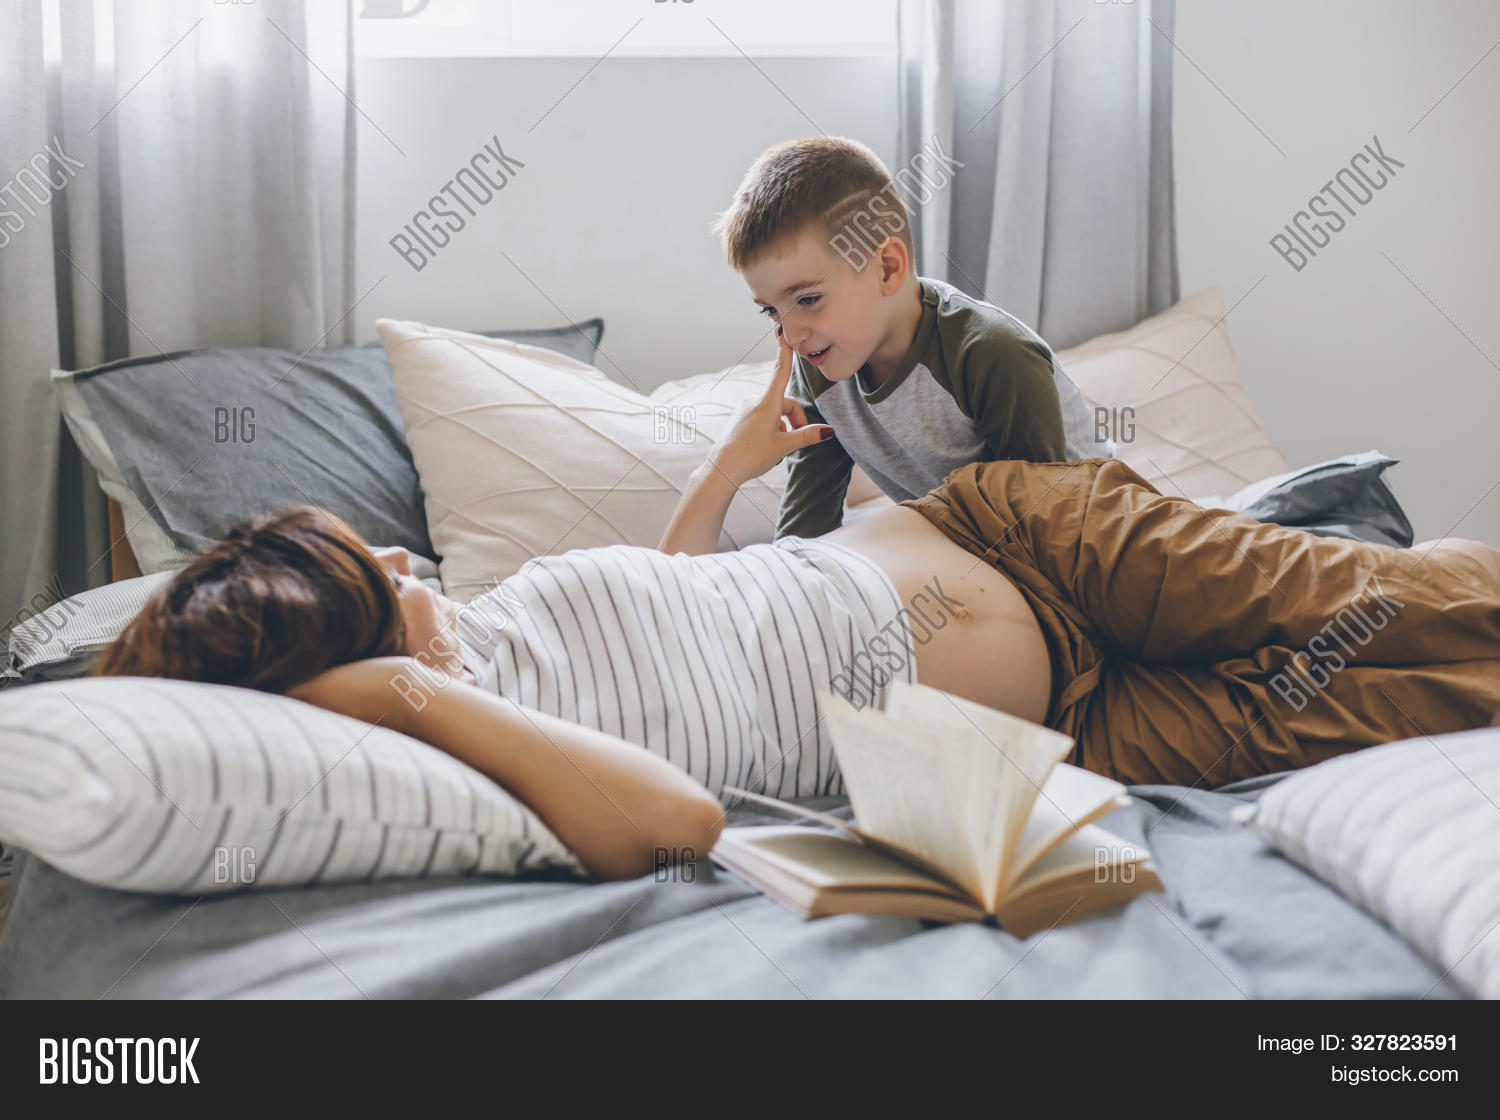 brad cullum add photo mom and son share same bed